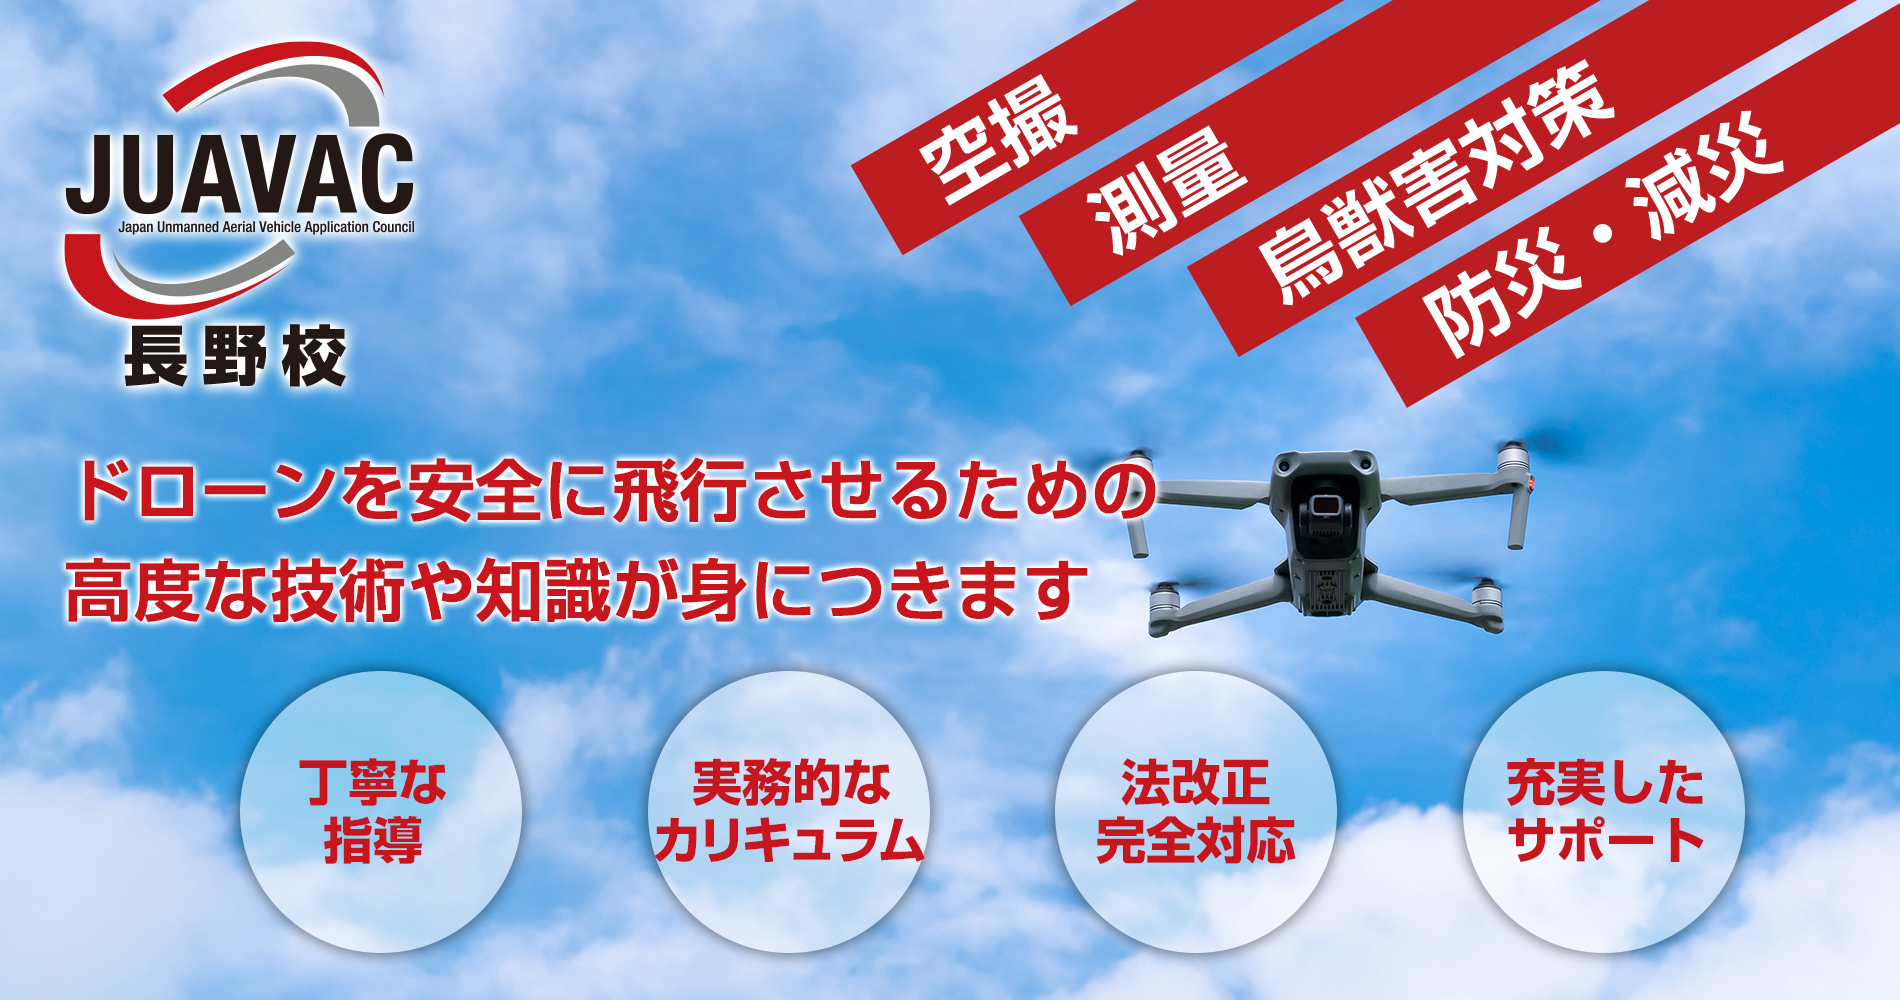 JUAVACドローンエキスパートアカデミーは小諸市佐久市軽井沢町のドローンスクールです。ドローンを安全に飛行させるための高度な技術や知識が身につきます